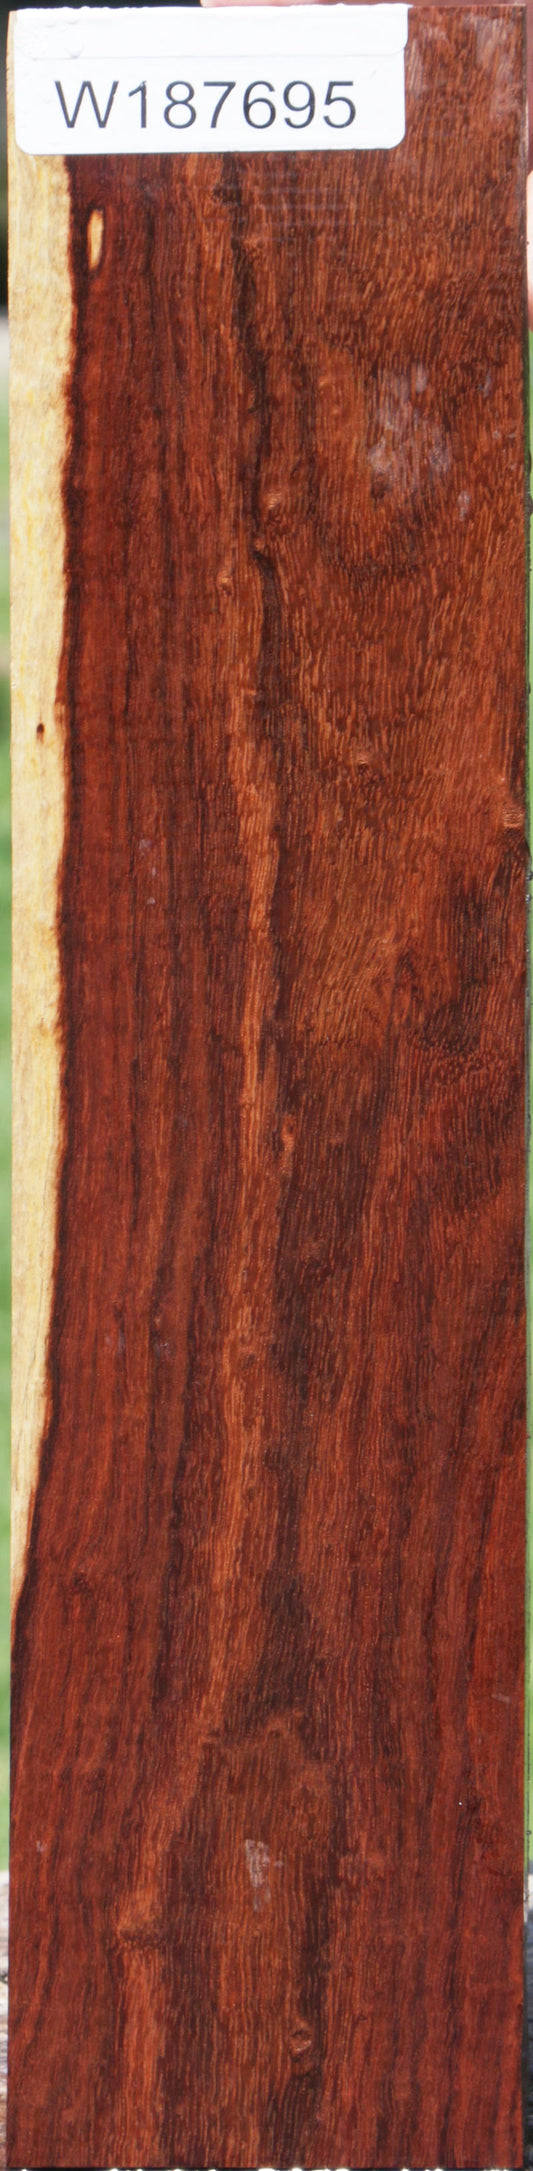 Granadillo Micro Lumber